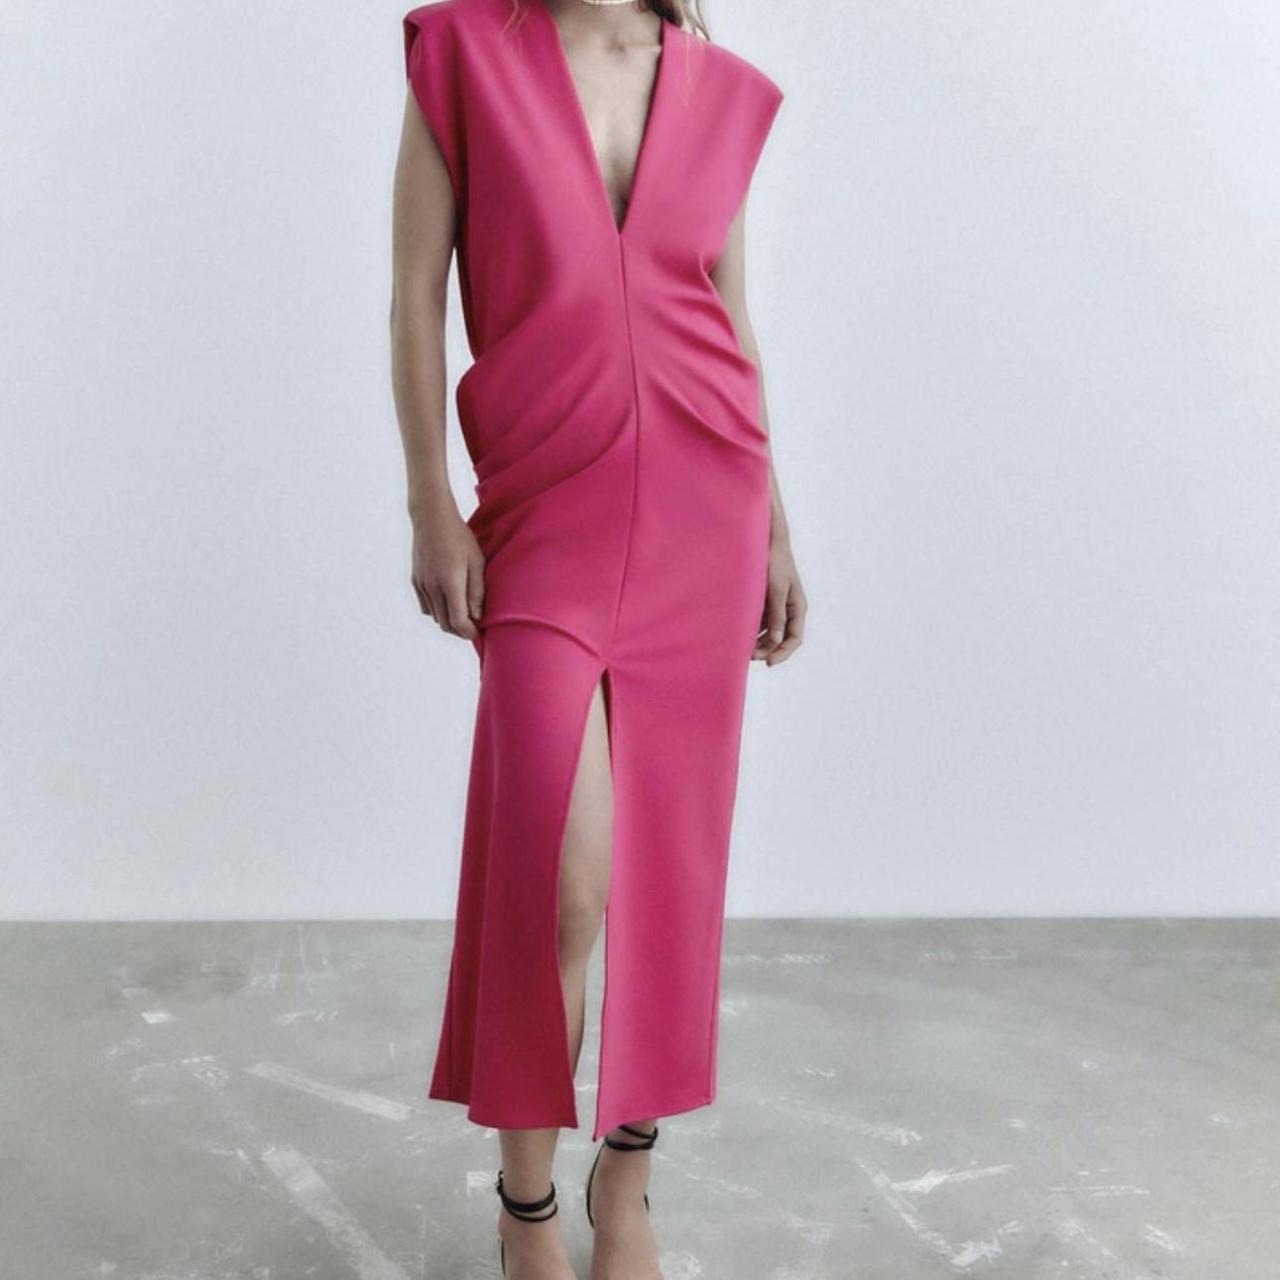 Zara Women's Pink Dress | Depop